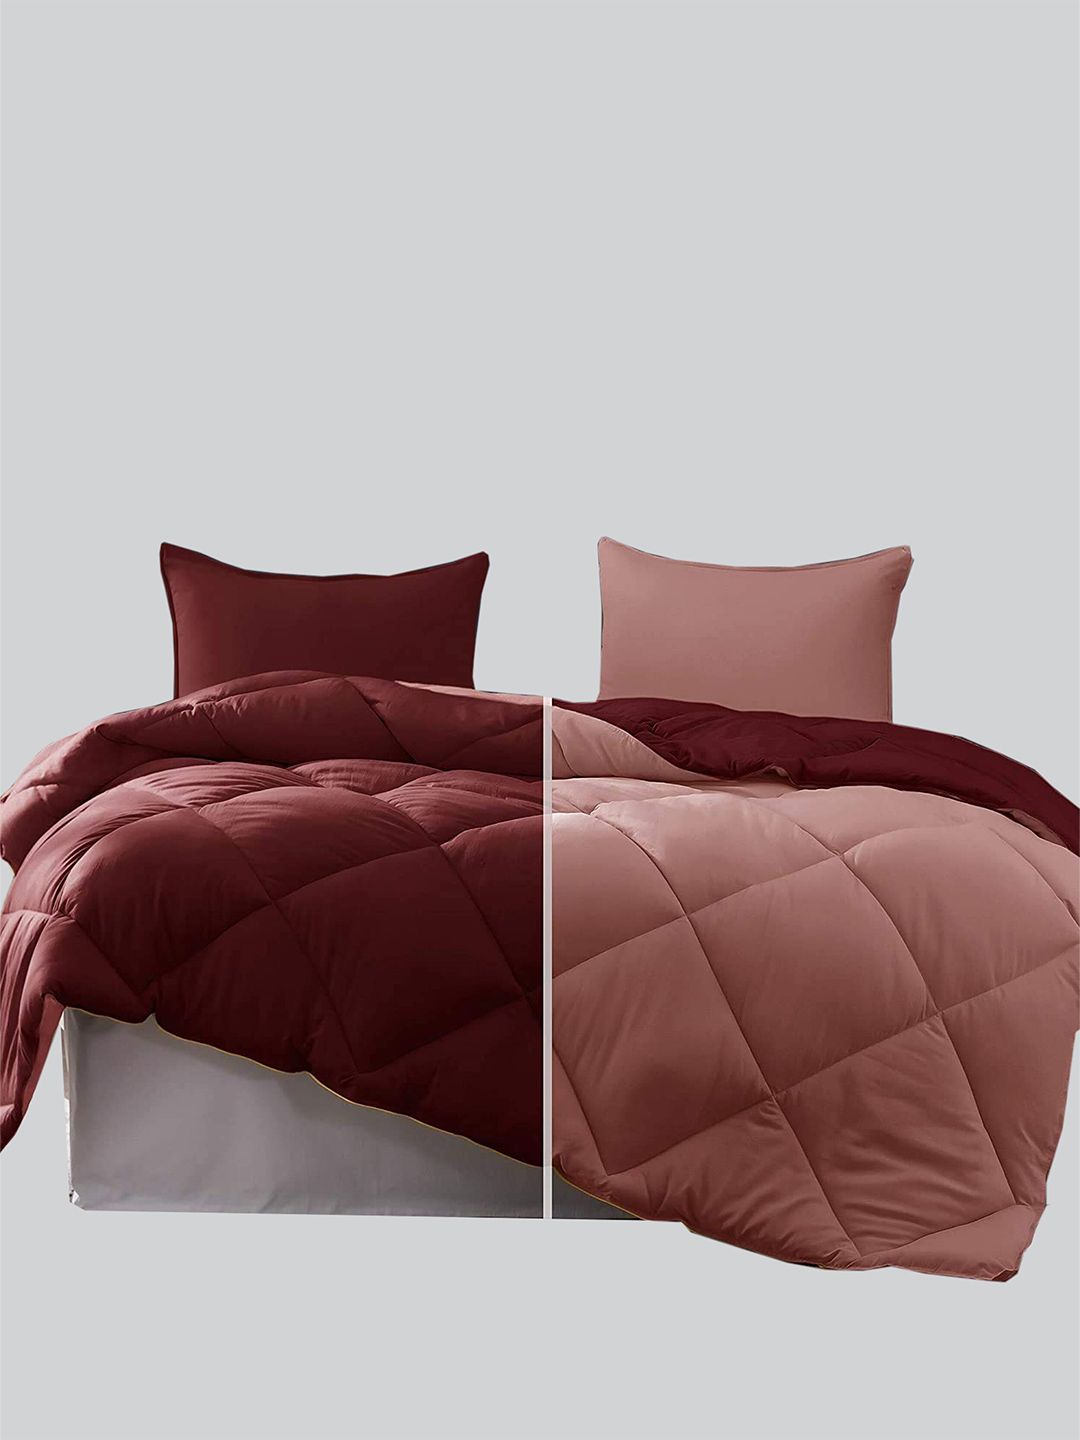 RAASO Maroon & Peach-Coloured Microfiber AC Room Reversible Single Bed Blanket Price in India